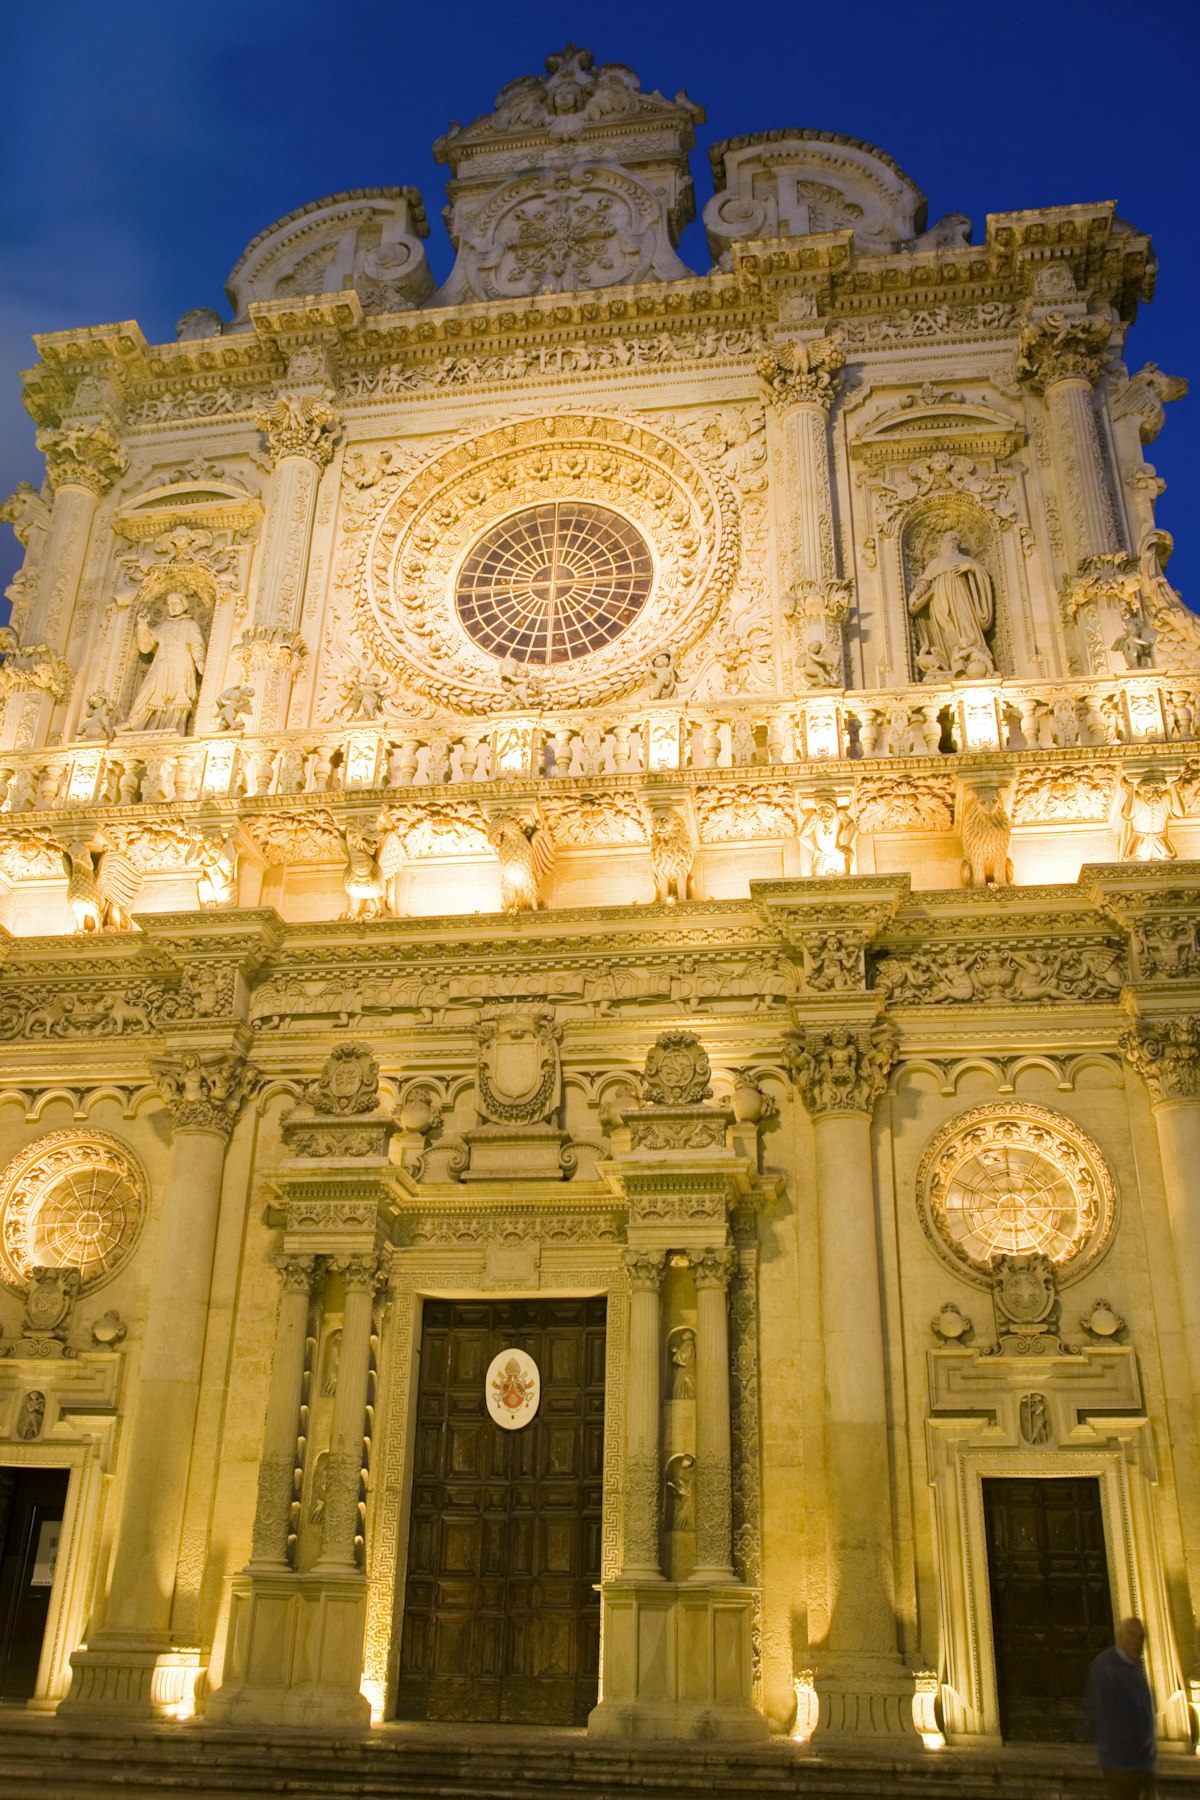 Baroque facade of Basilica di Santa Croce.